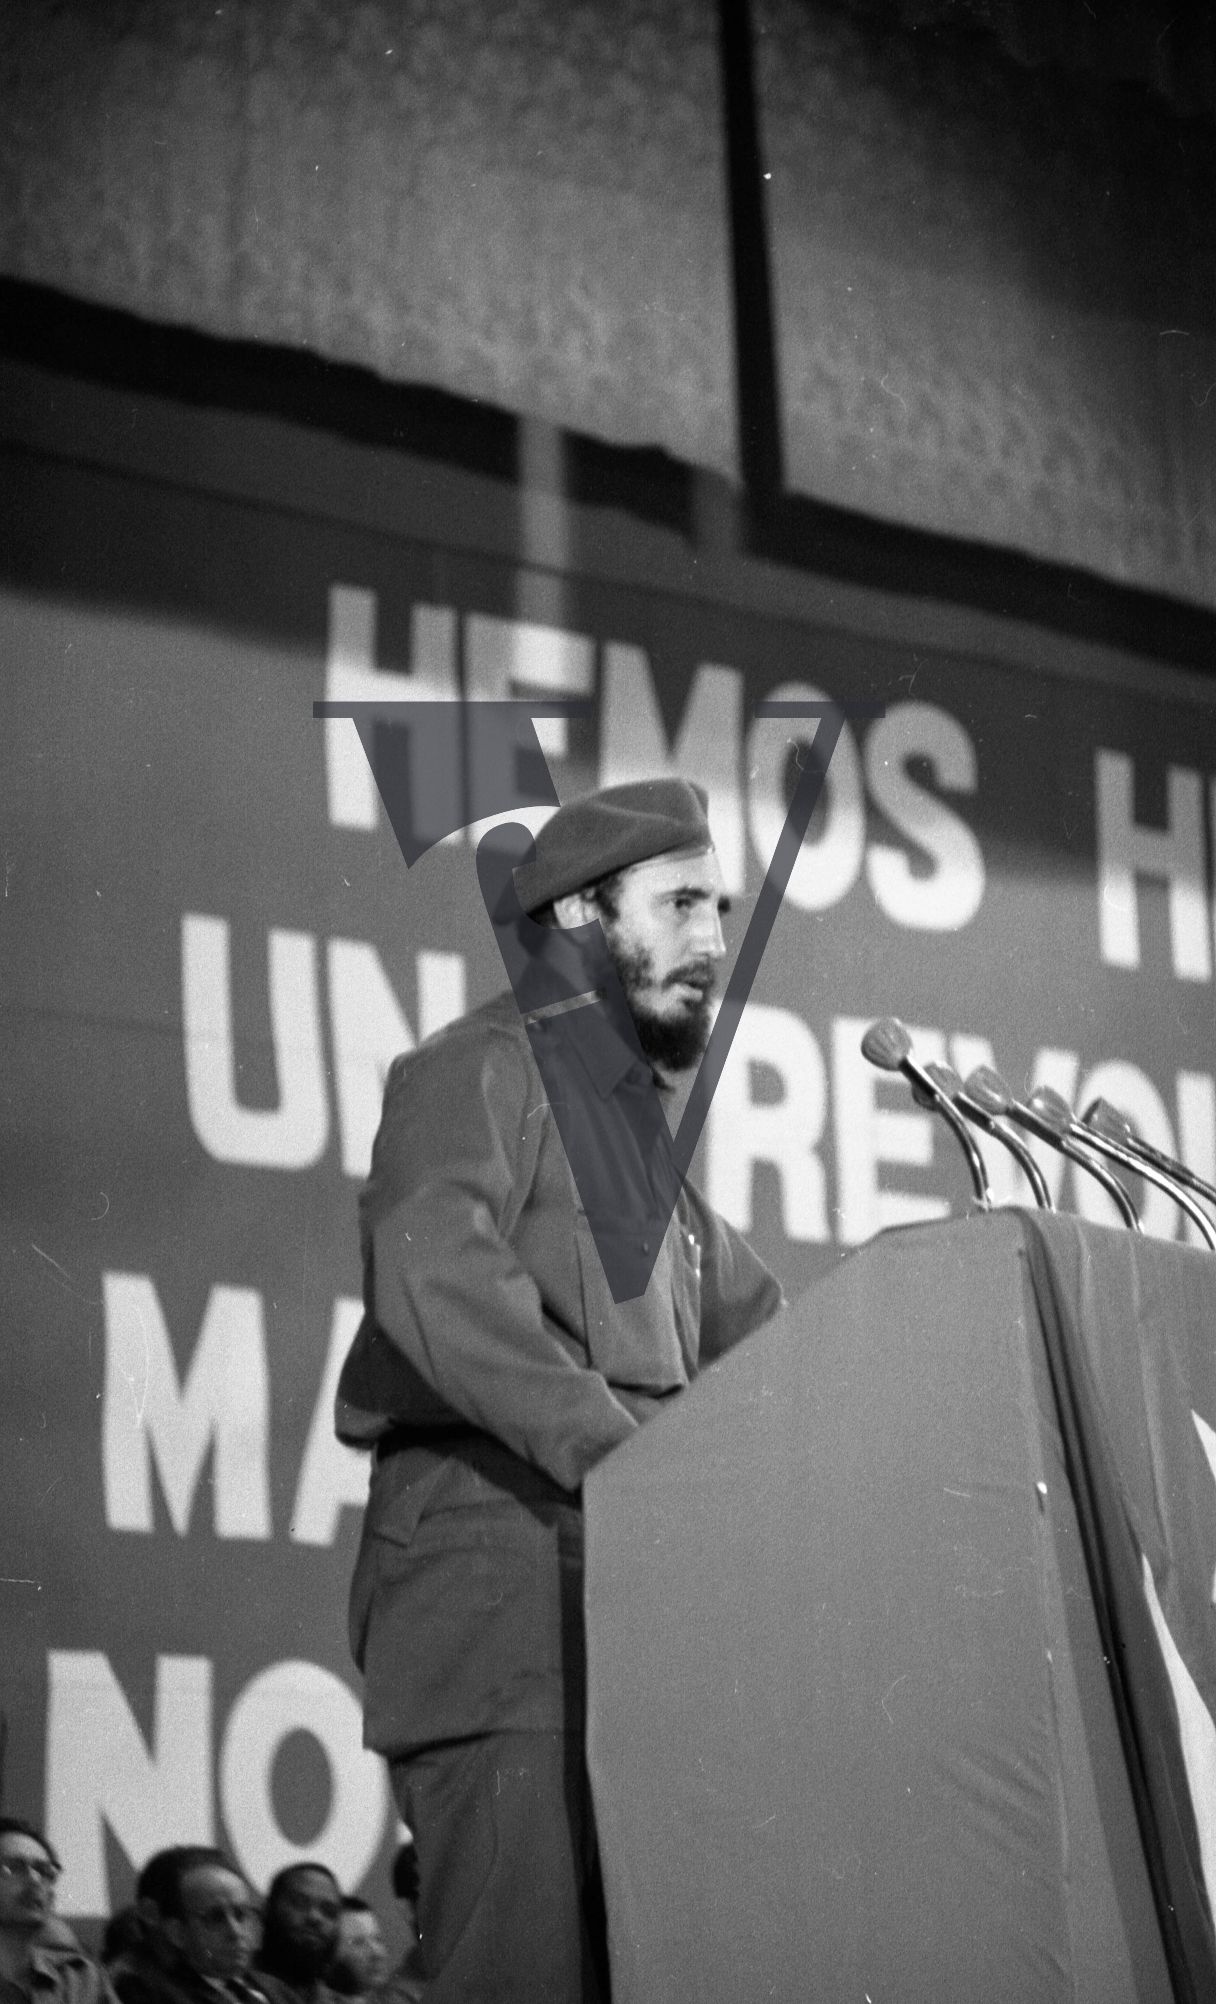 Cuba, Fidel Castro conference speech, standing at plinth.